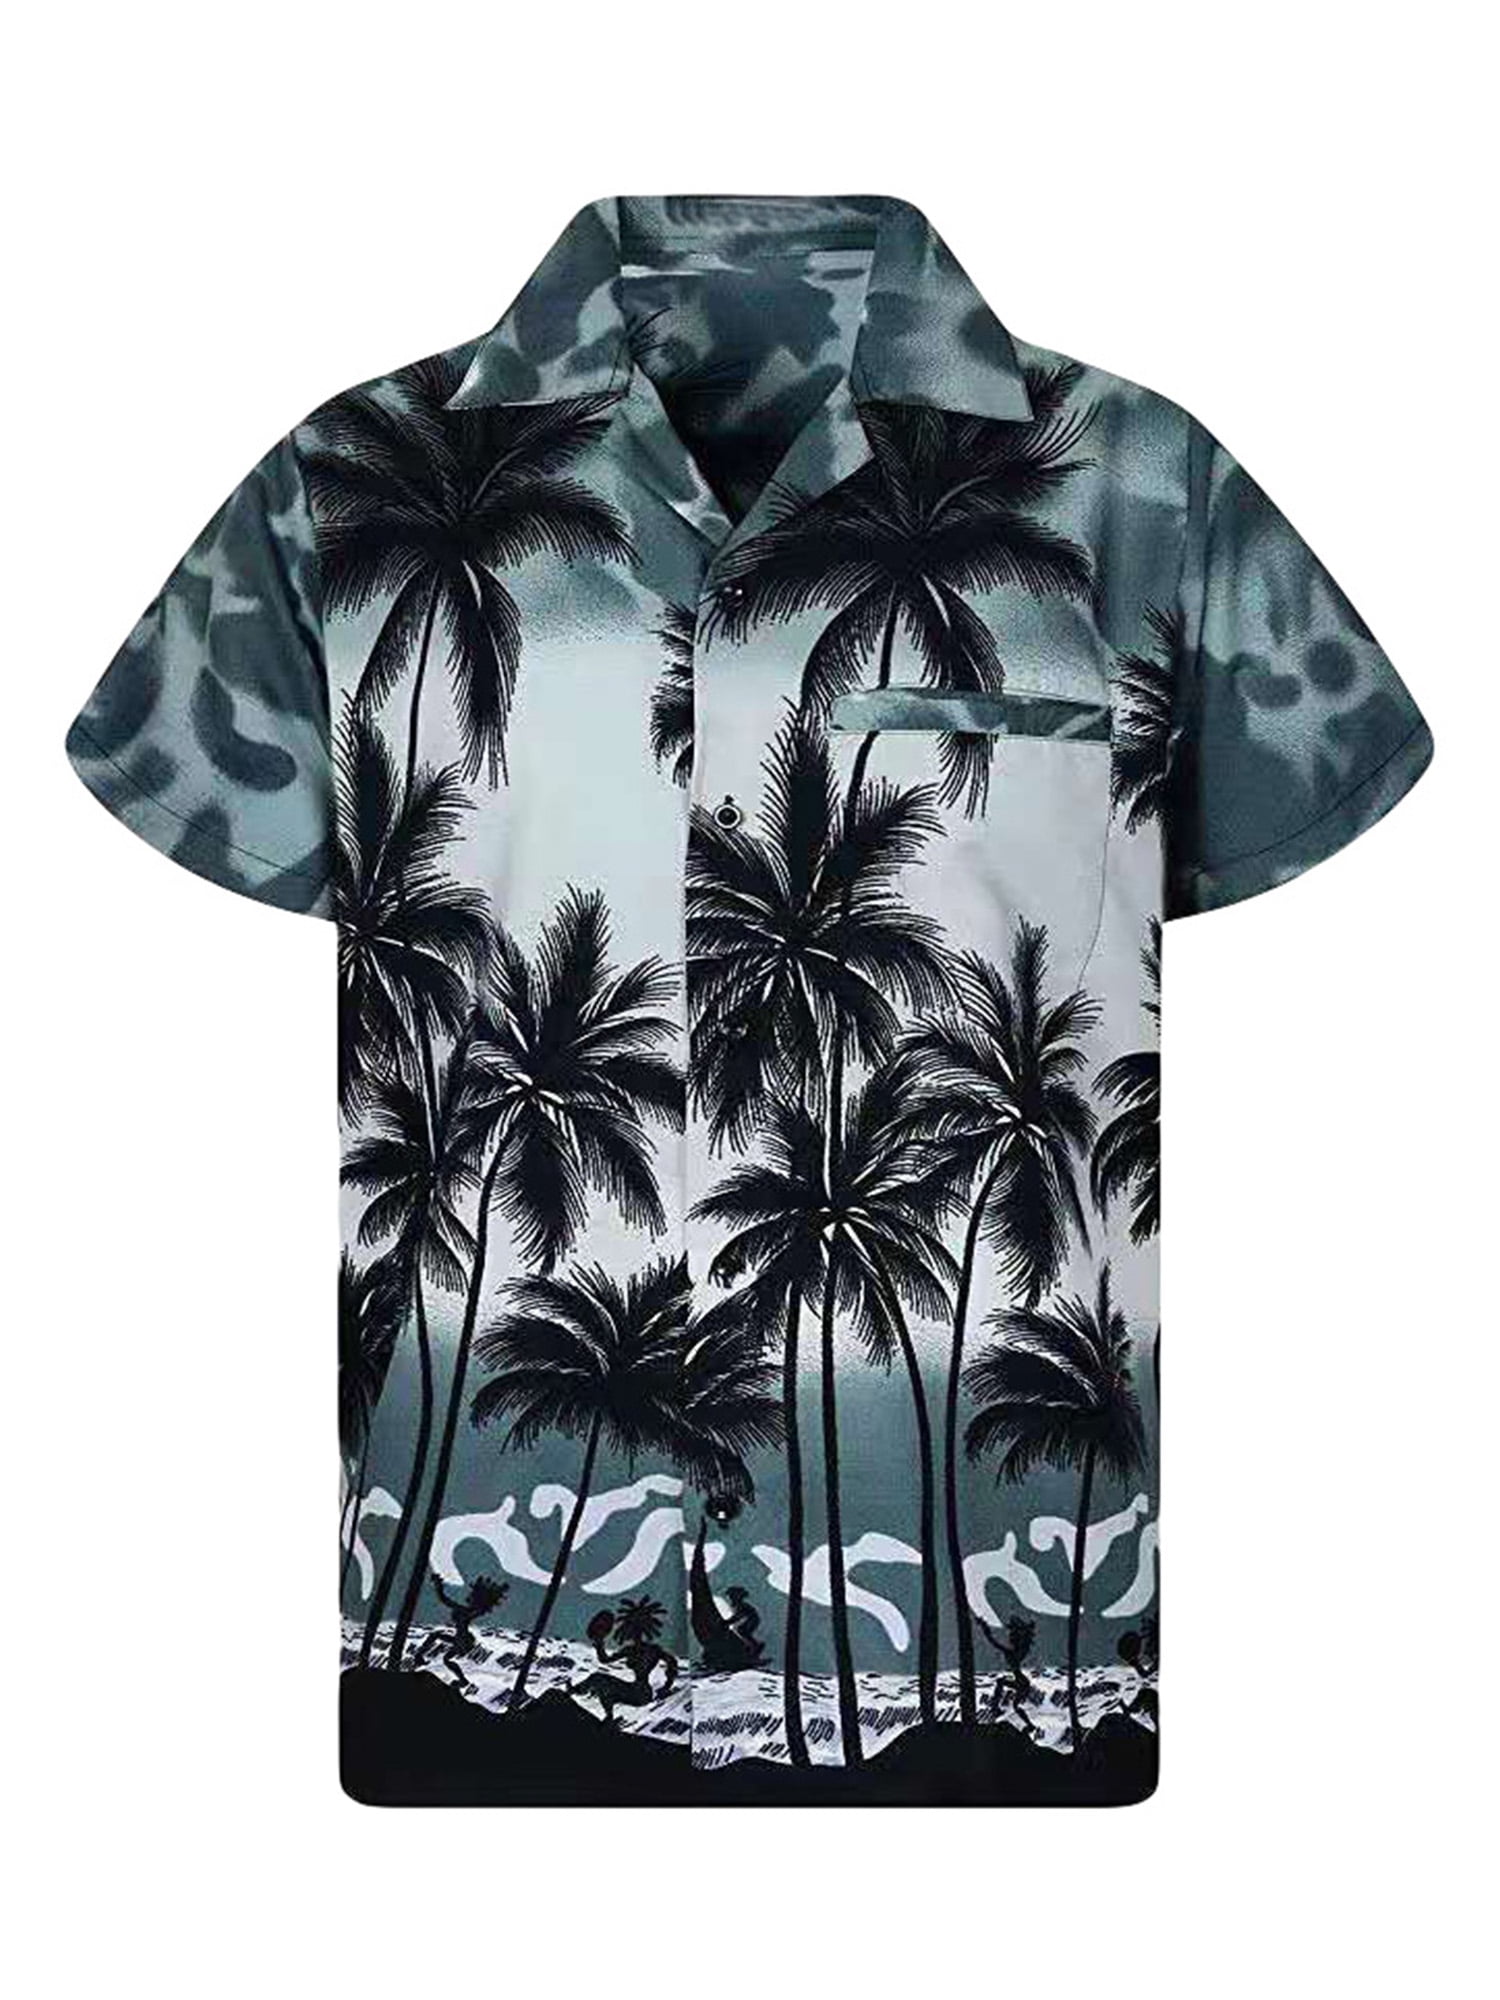 InterestPrint Button Down Shirt Colorful Cannabis Leaves Black Print Casual Button Down Short Sleeve Shirt